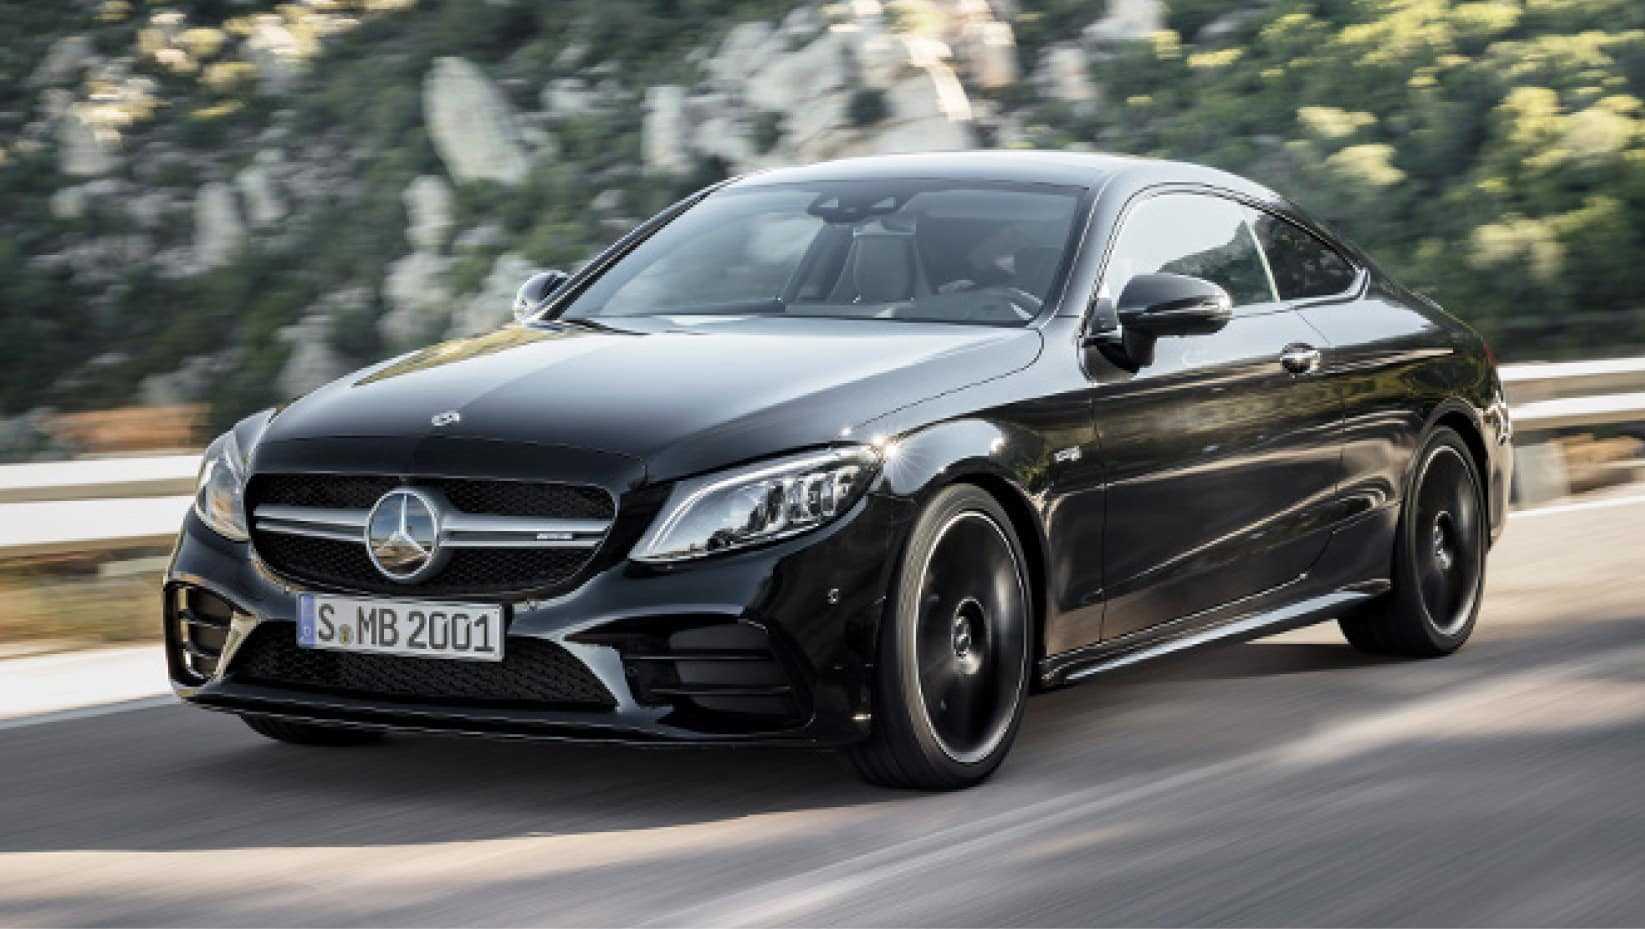 Mercedes a-class (седан) 2019: дизайнерская и конструктивная изысканность